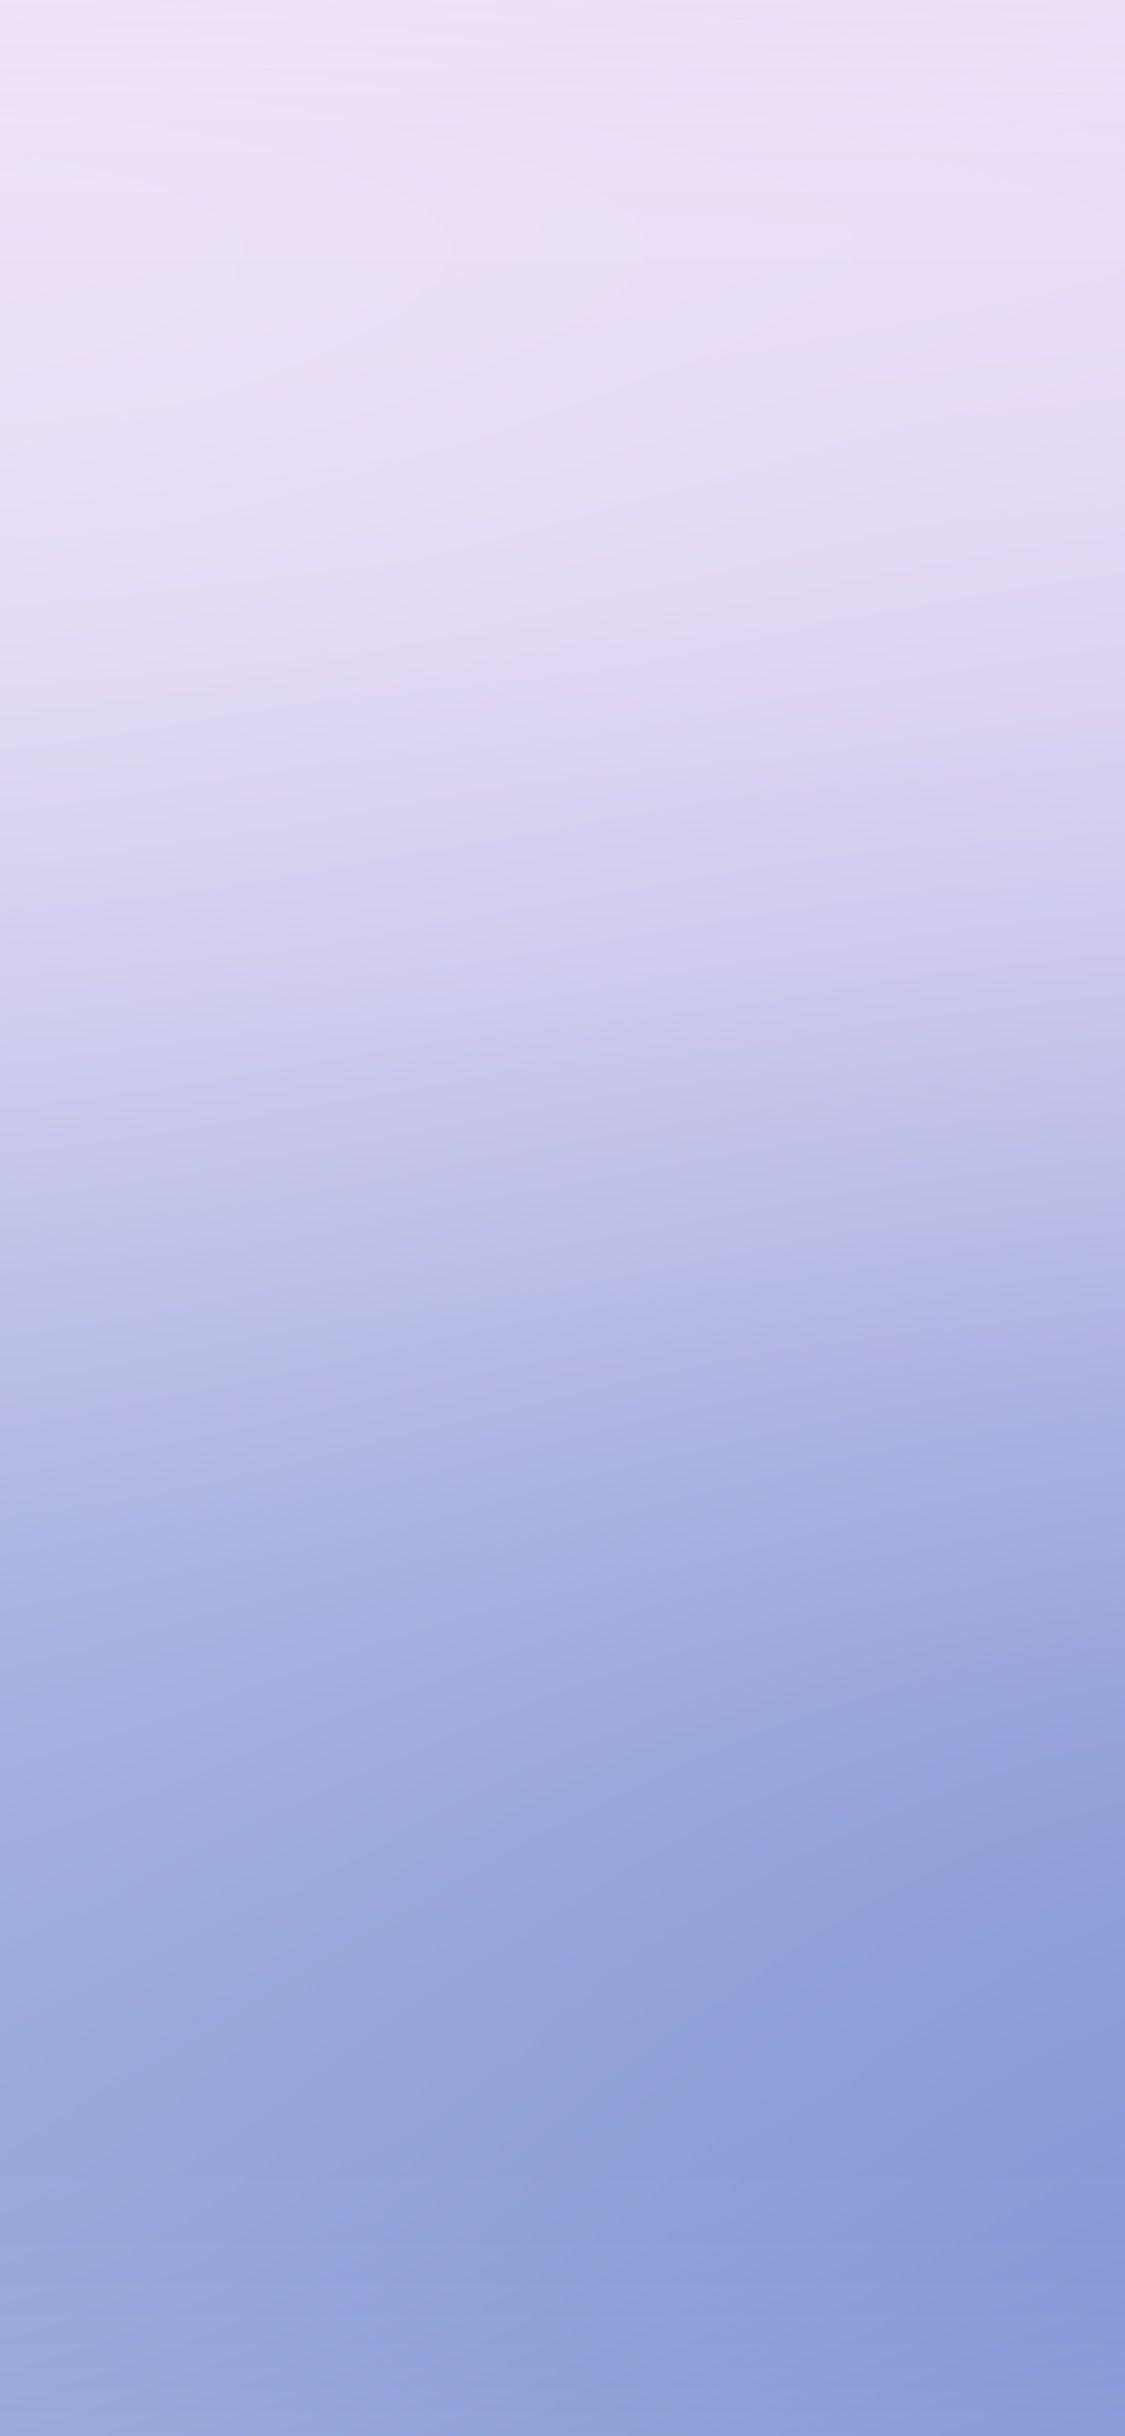 Soft Pastel Blue Blur Gradation Via